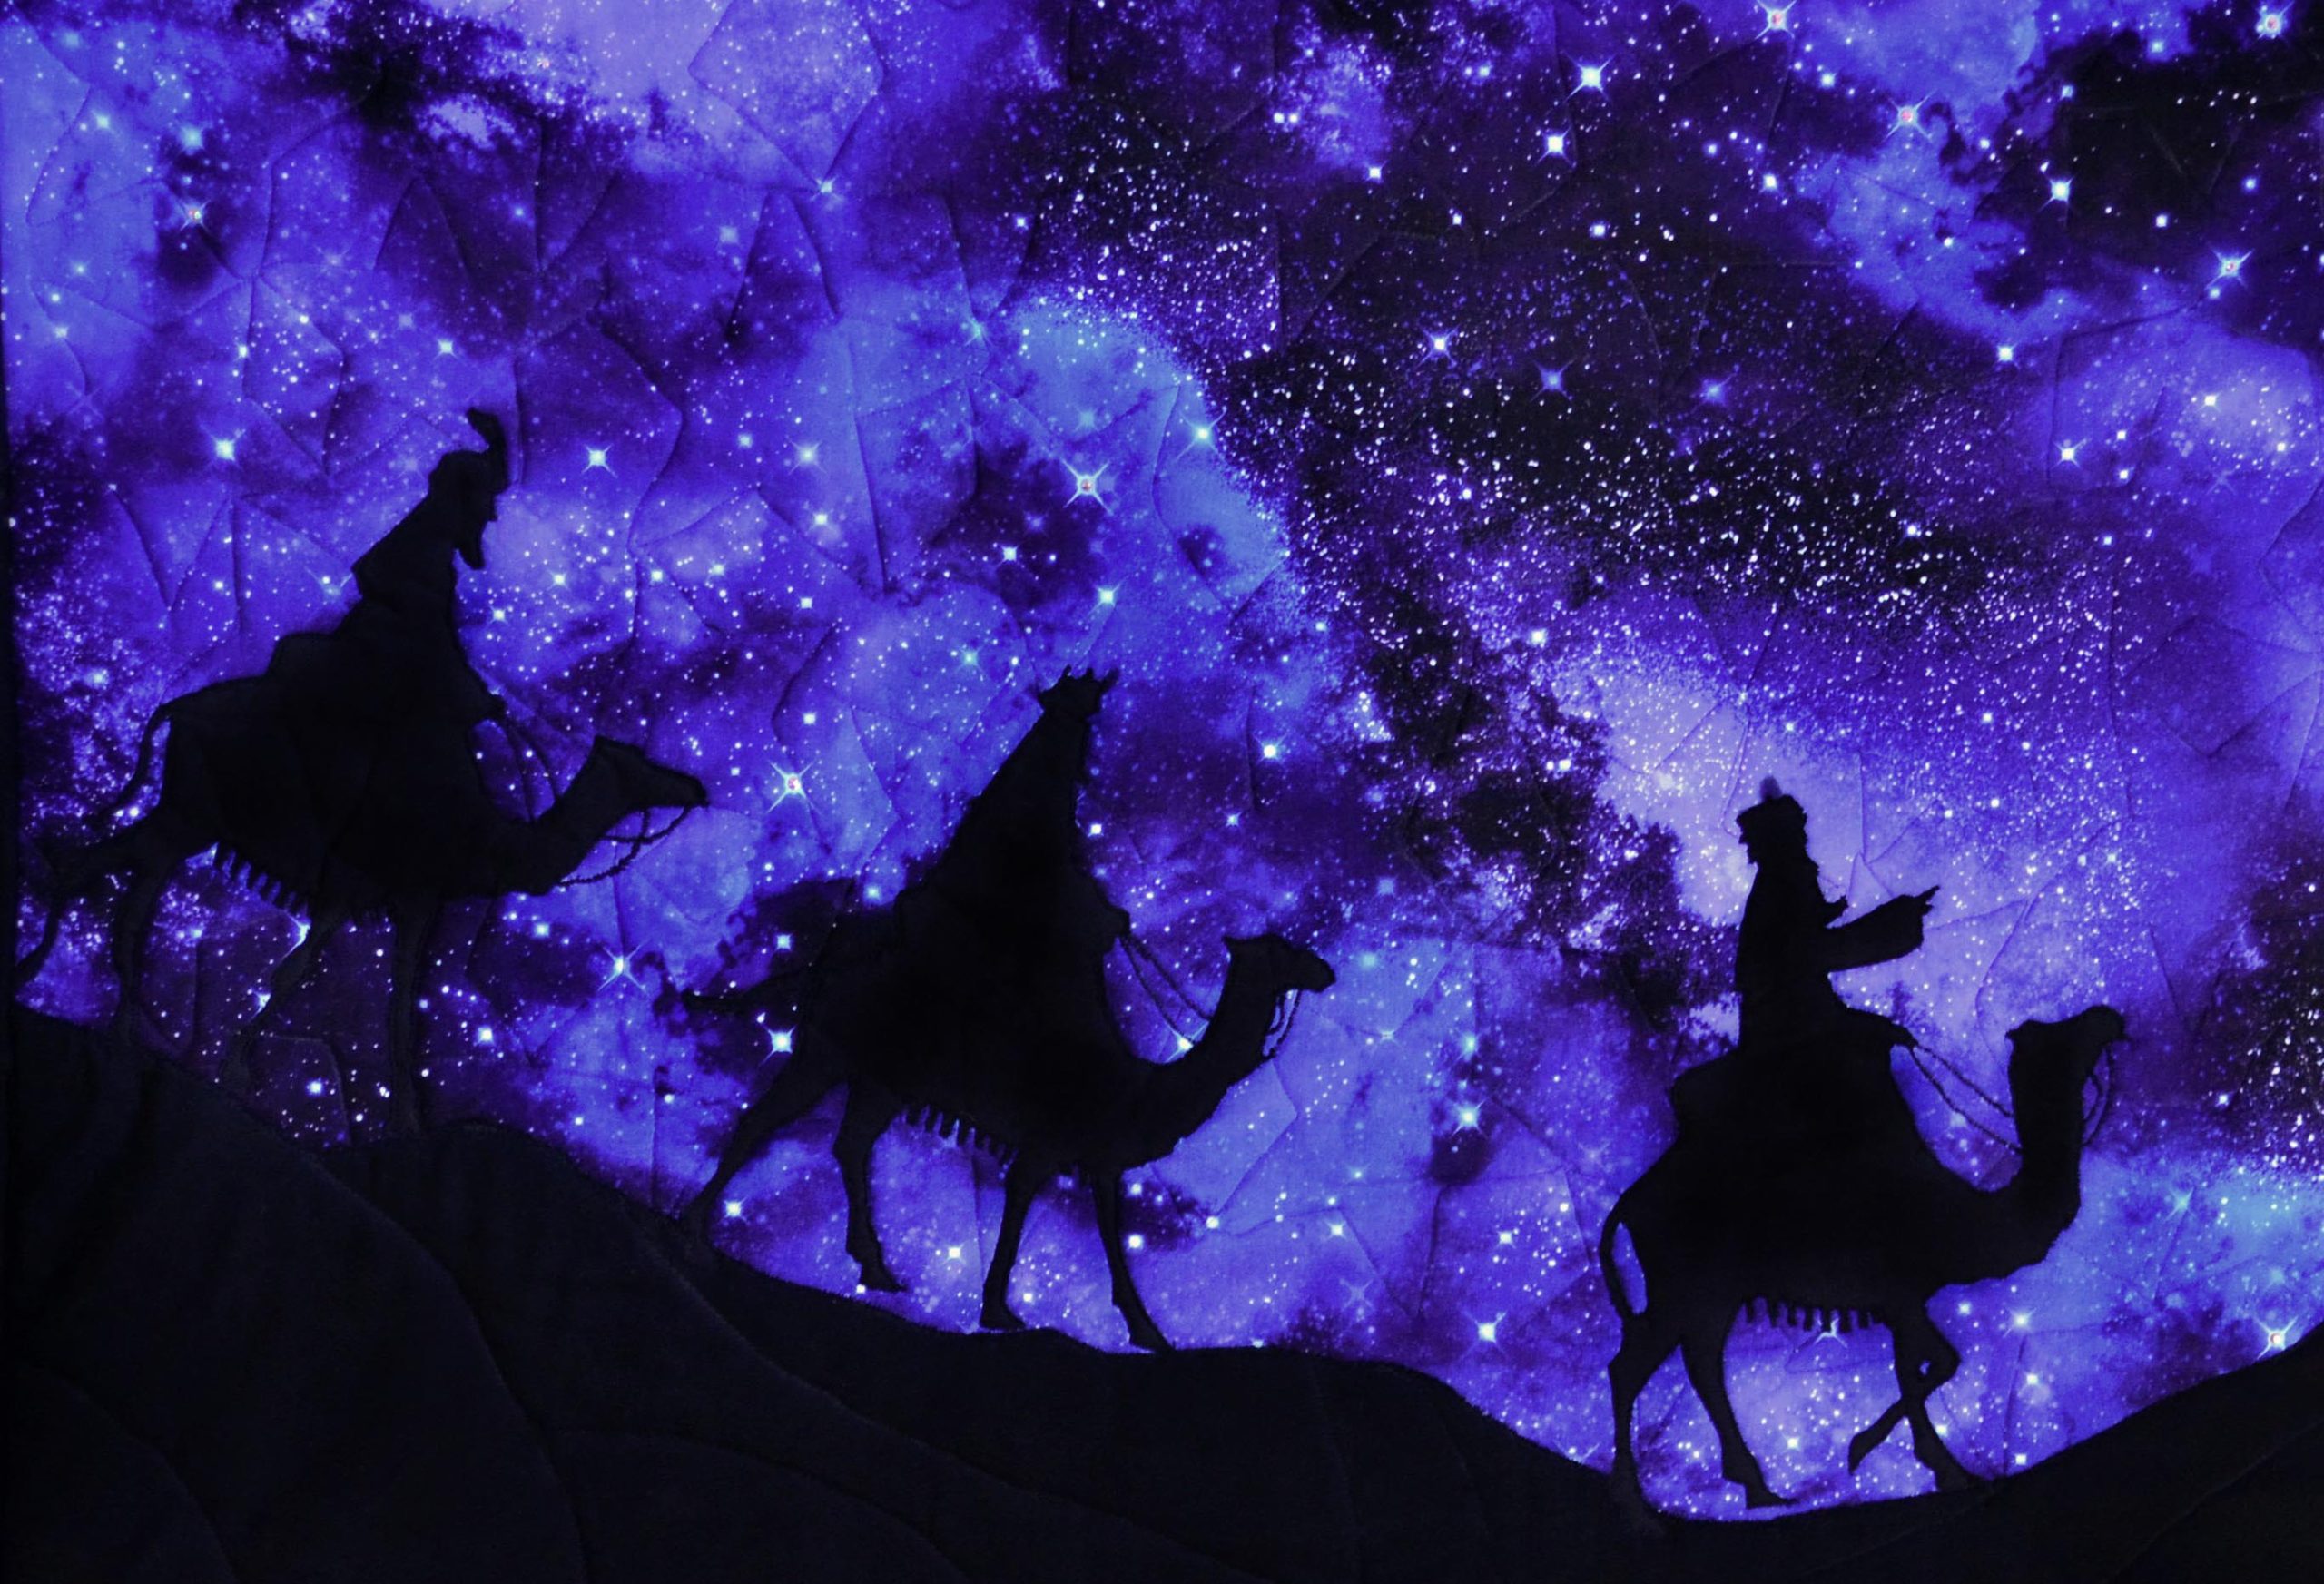 3 wise men following yonder star